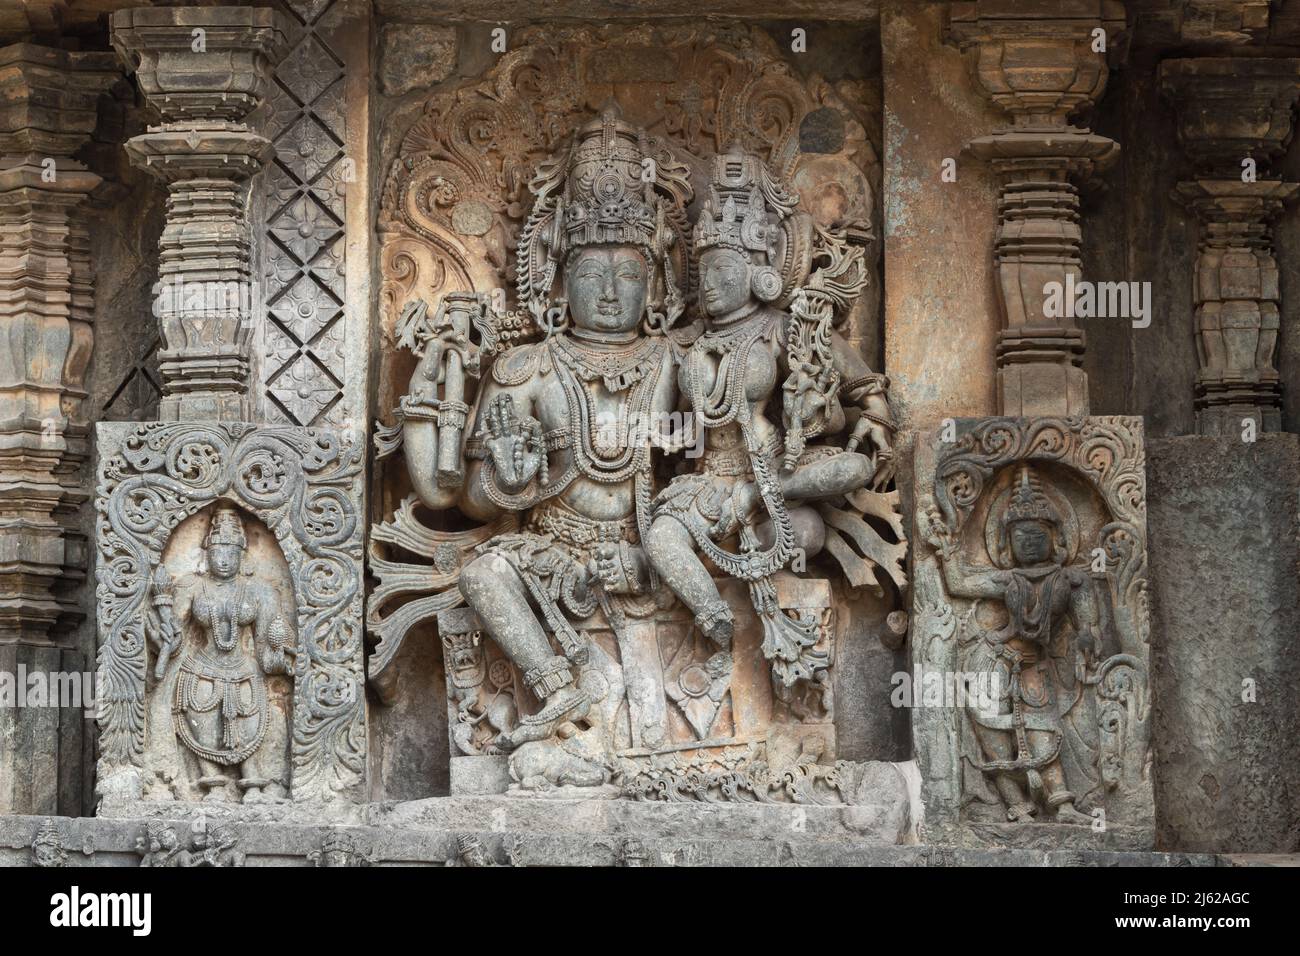 La Sculpture de Lord Shiva et Parvati sur le Temple Hoysaleswara, Halebeedu, Karnataka, Inde Banque D'Images